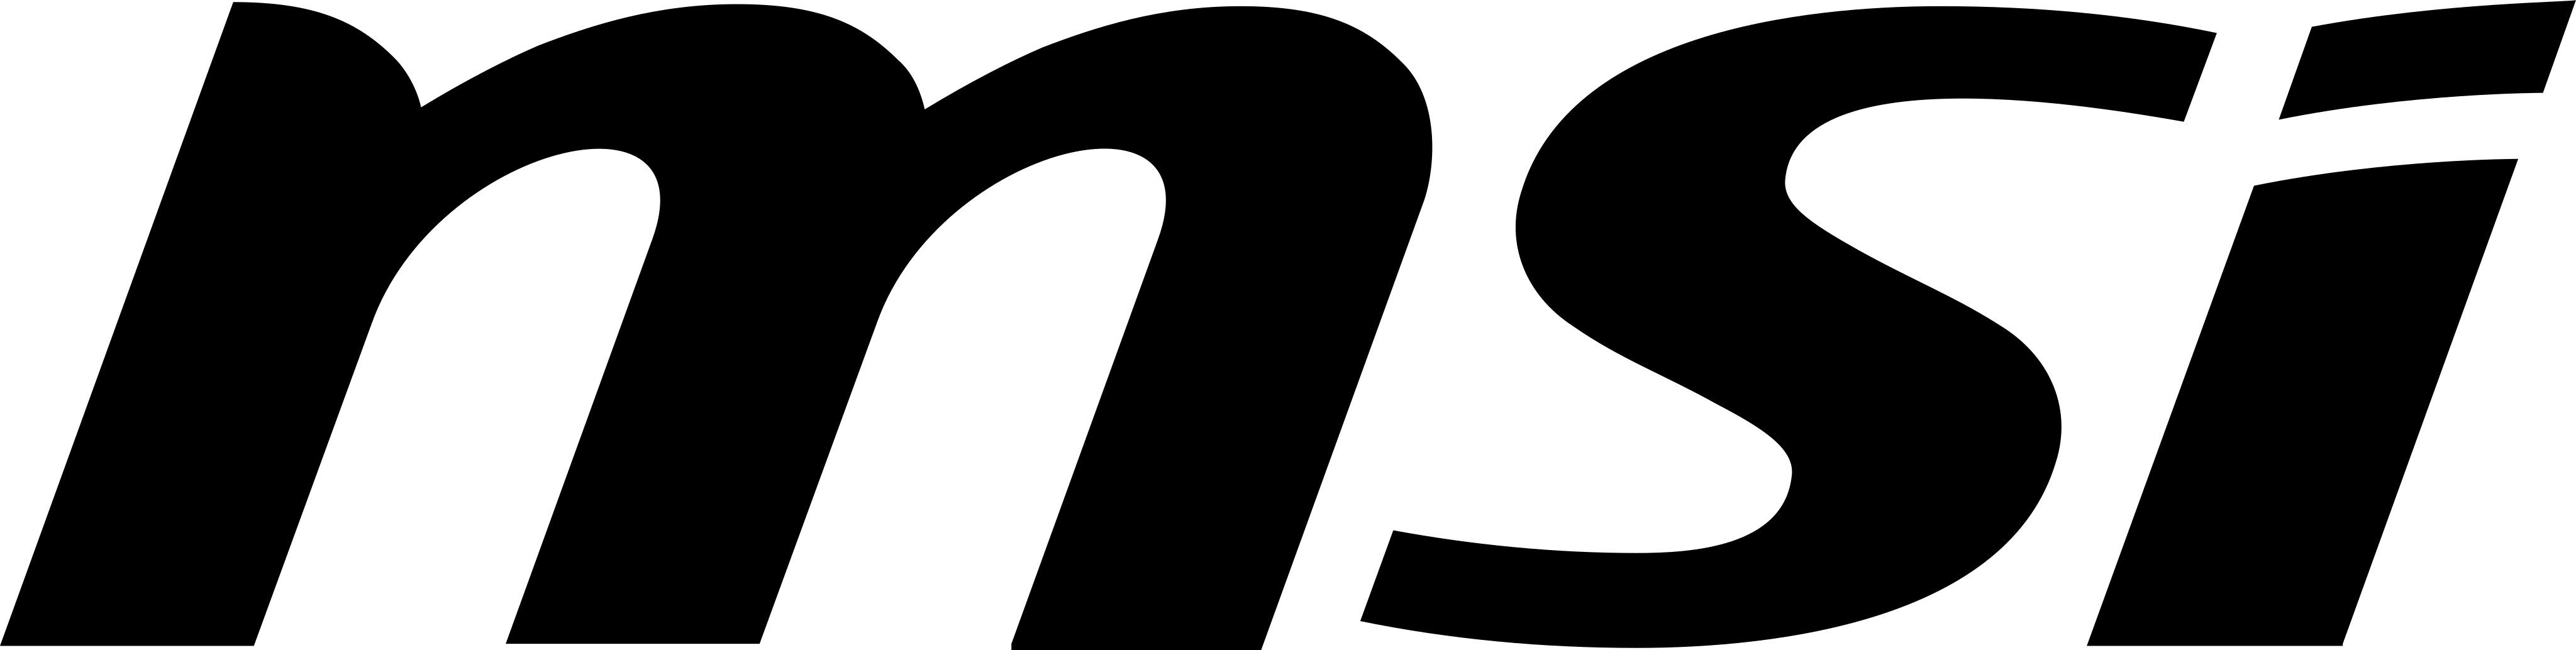 Msi Logo   Png And Vector   Logo Download - Msi, Transparent background PNG HD thumbnail